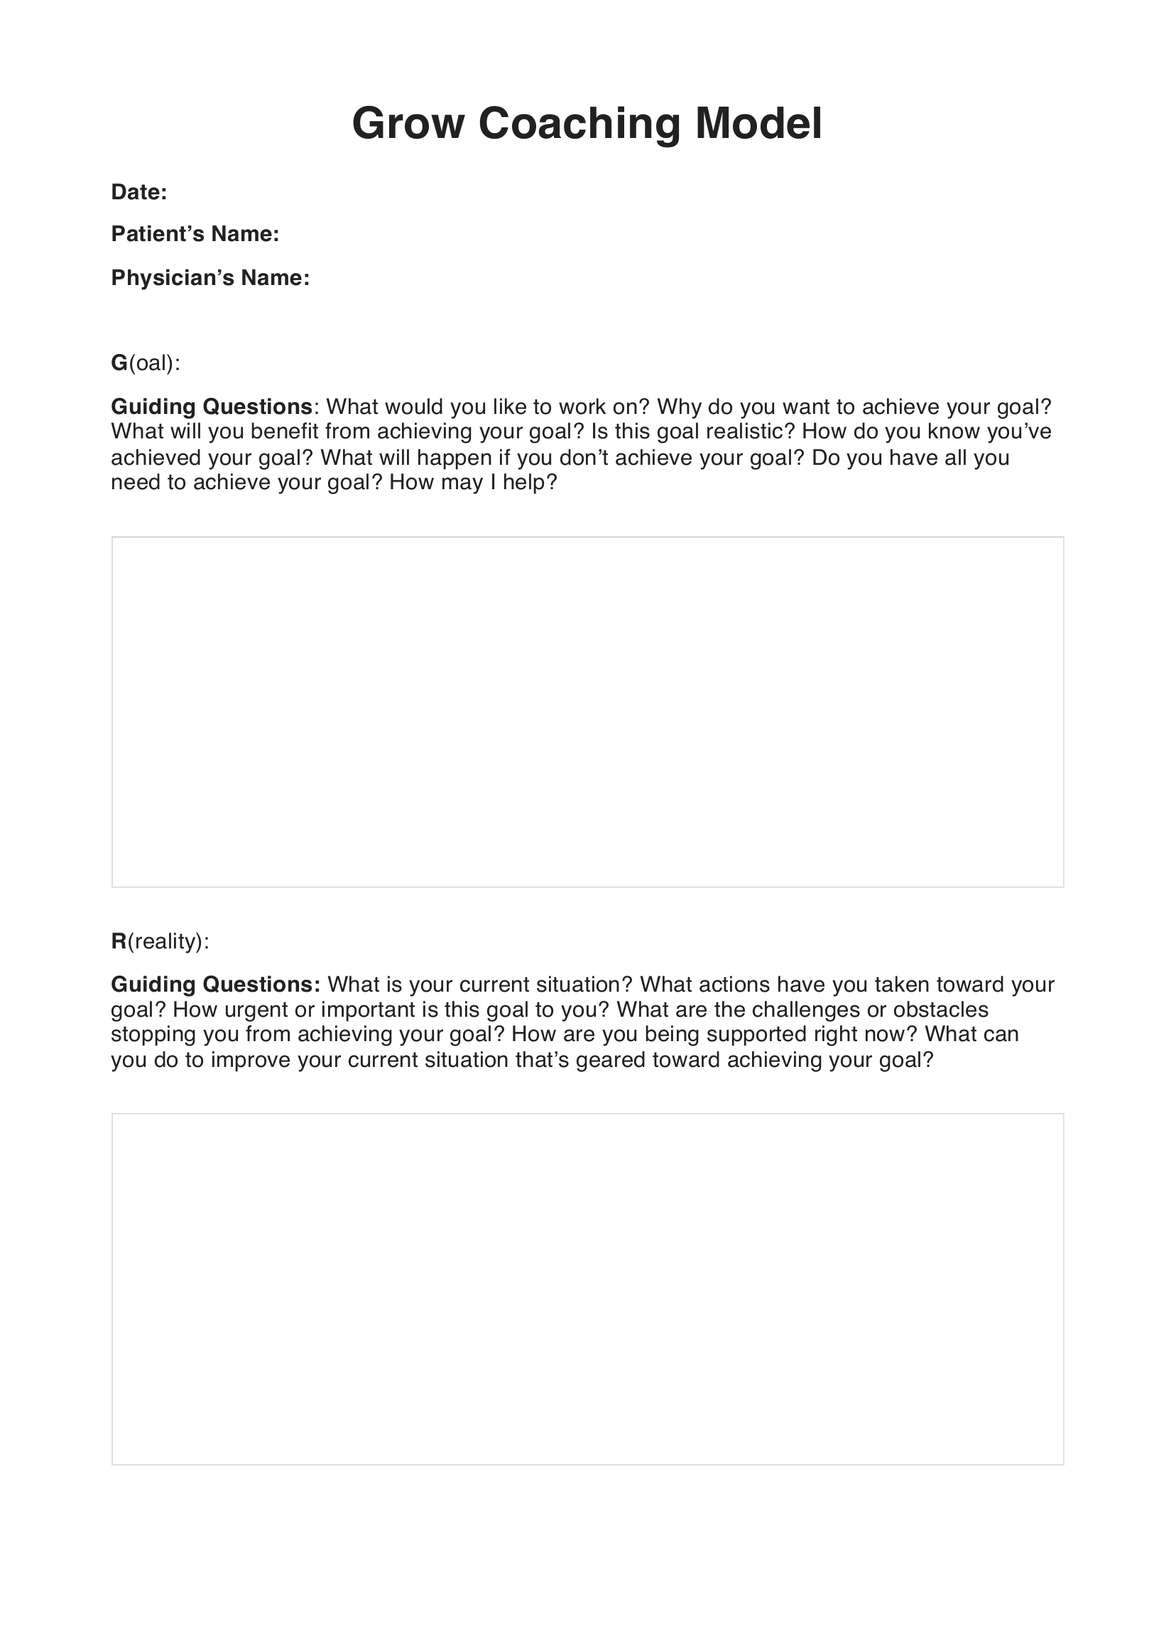 Grow Coaching Model PDF Example